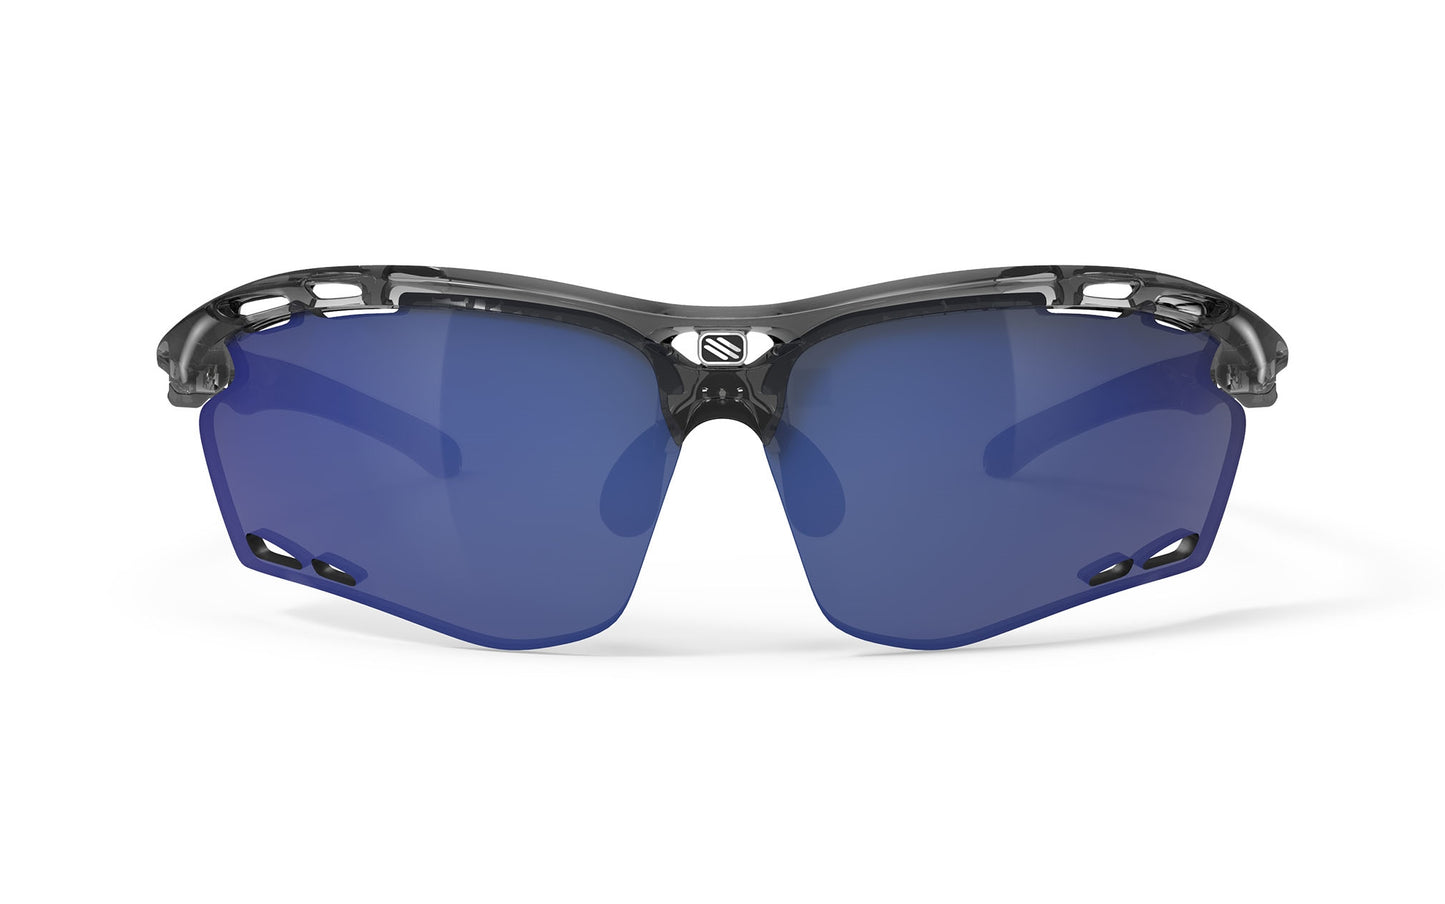 Rudy Project Propulse Crystal Ash - Rp Optics Multilaser Blue Sunglasses